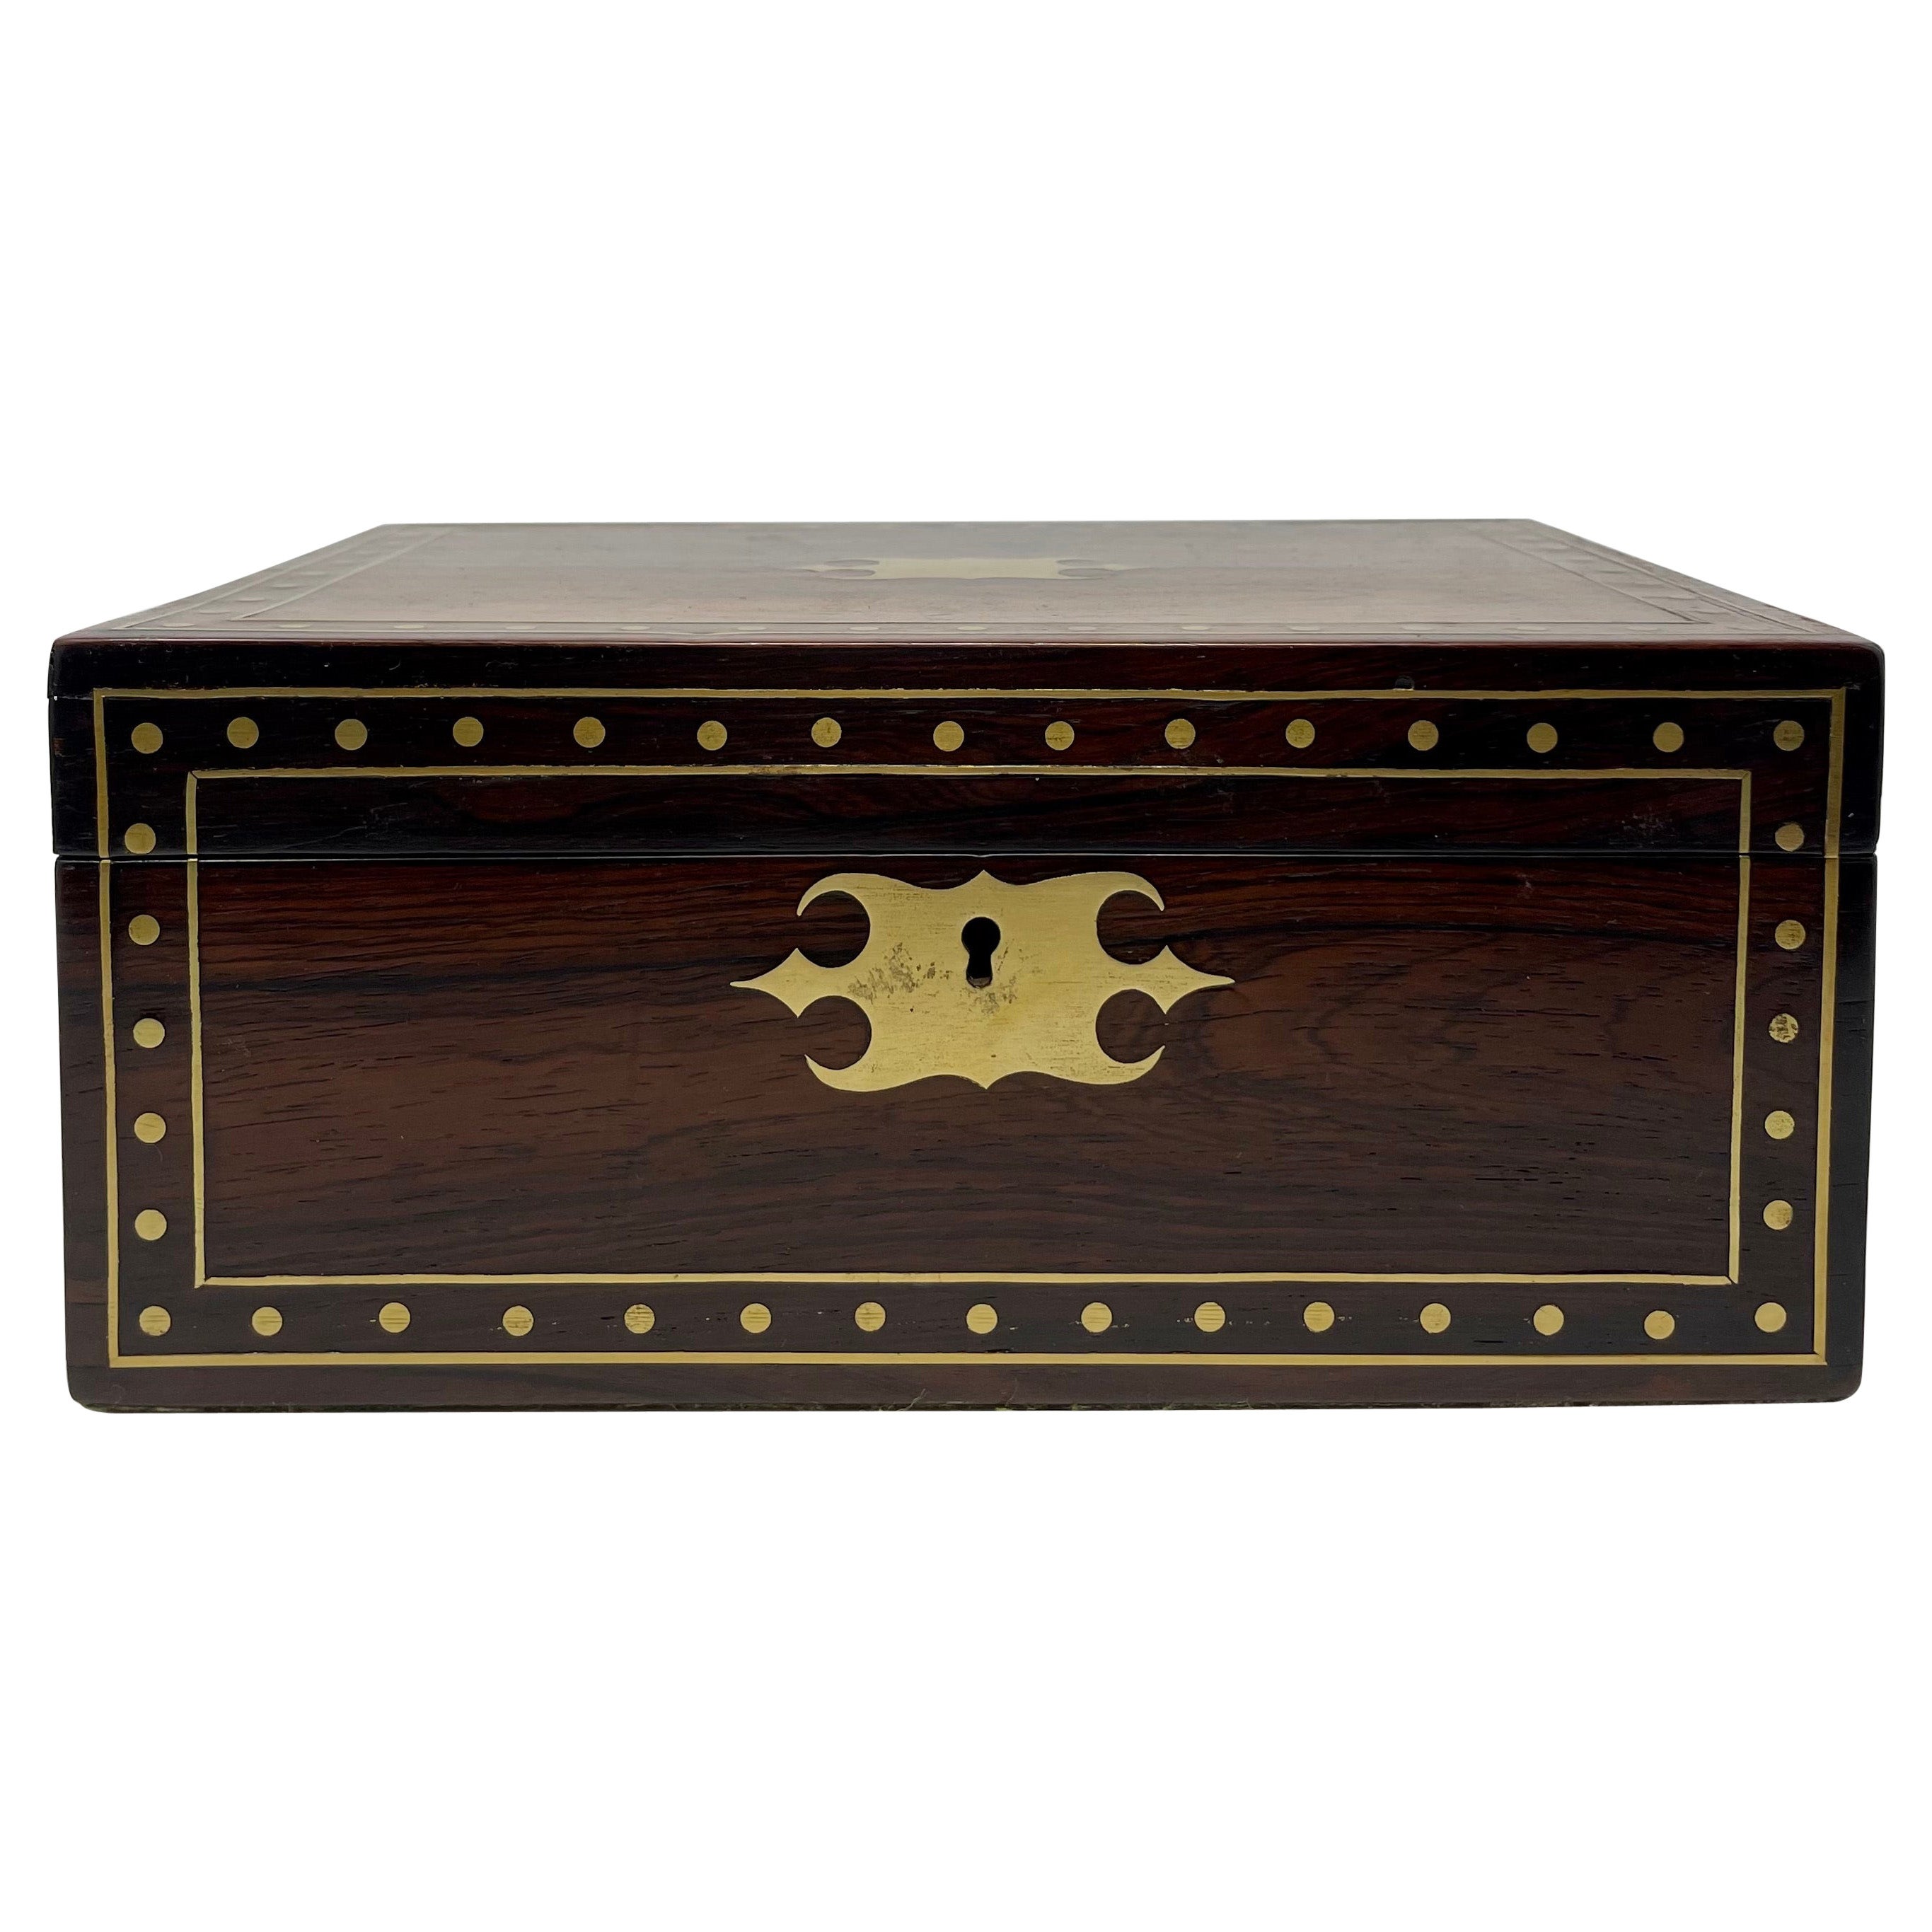 Antique English Regency Period Rosewood Inlaid Box, Circa 1820.